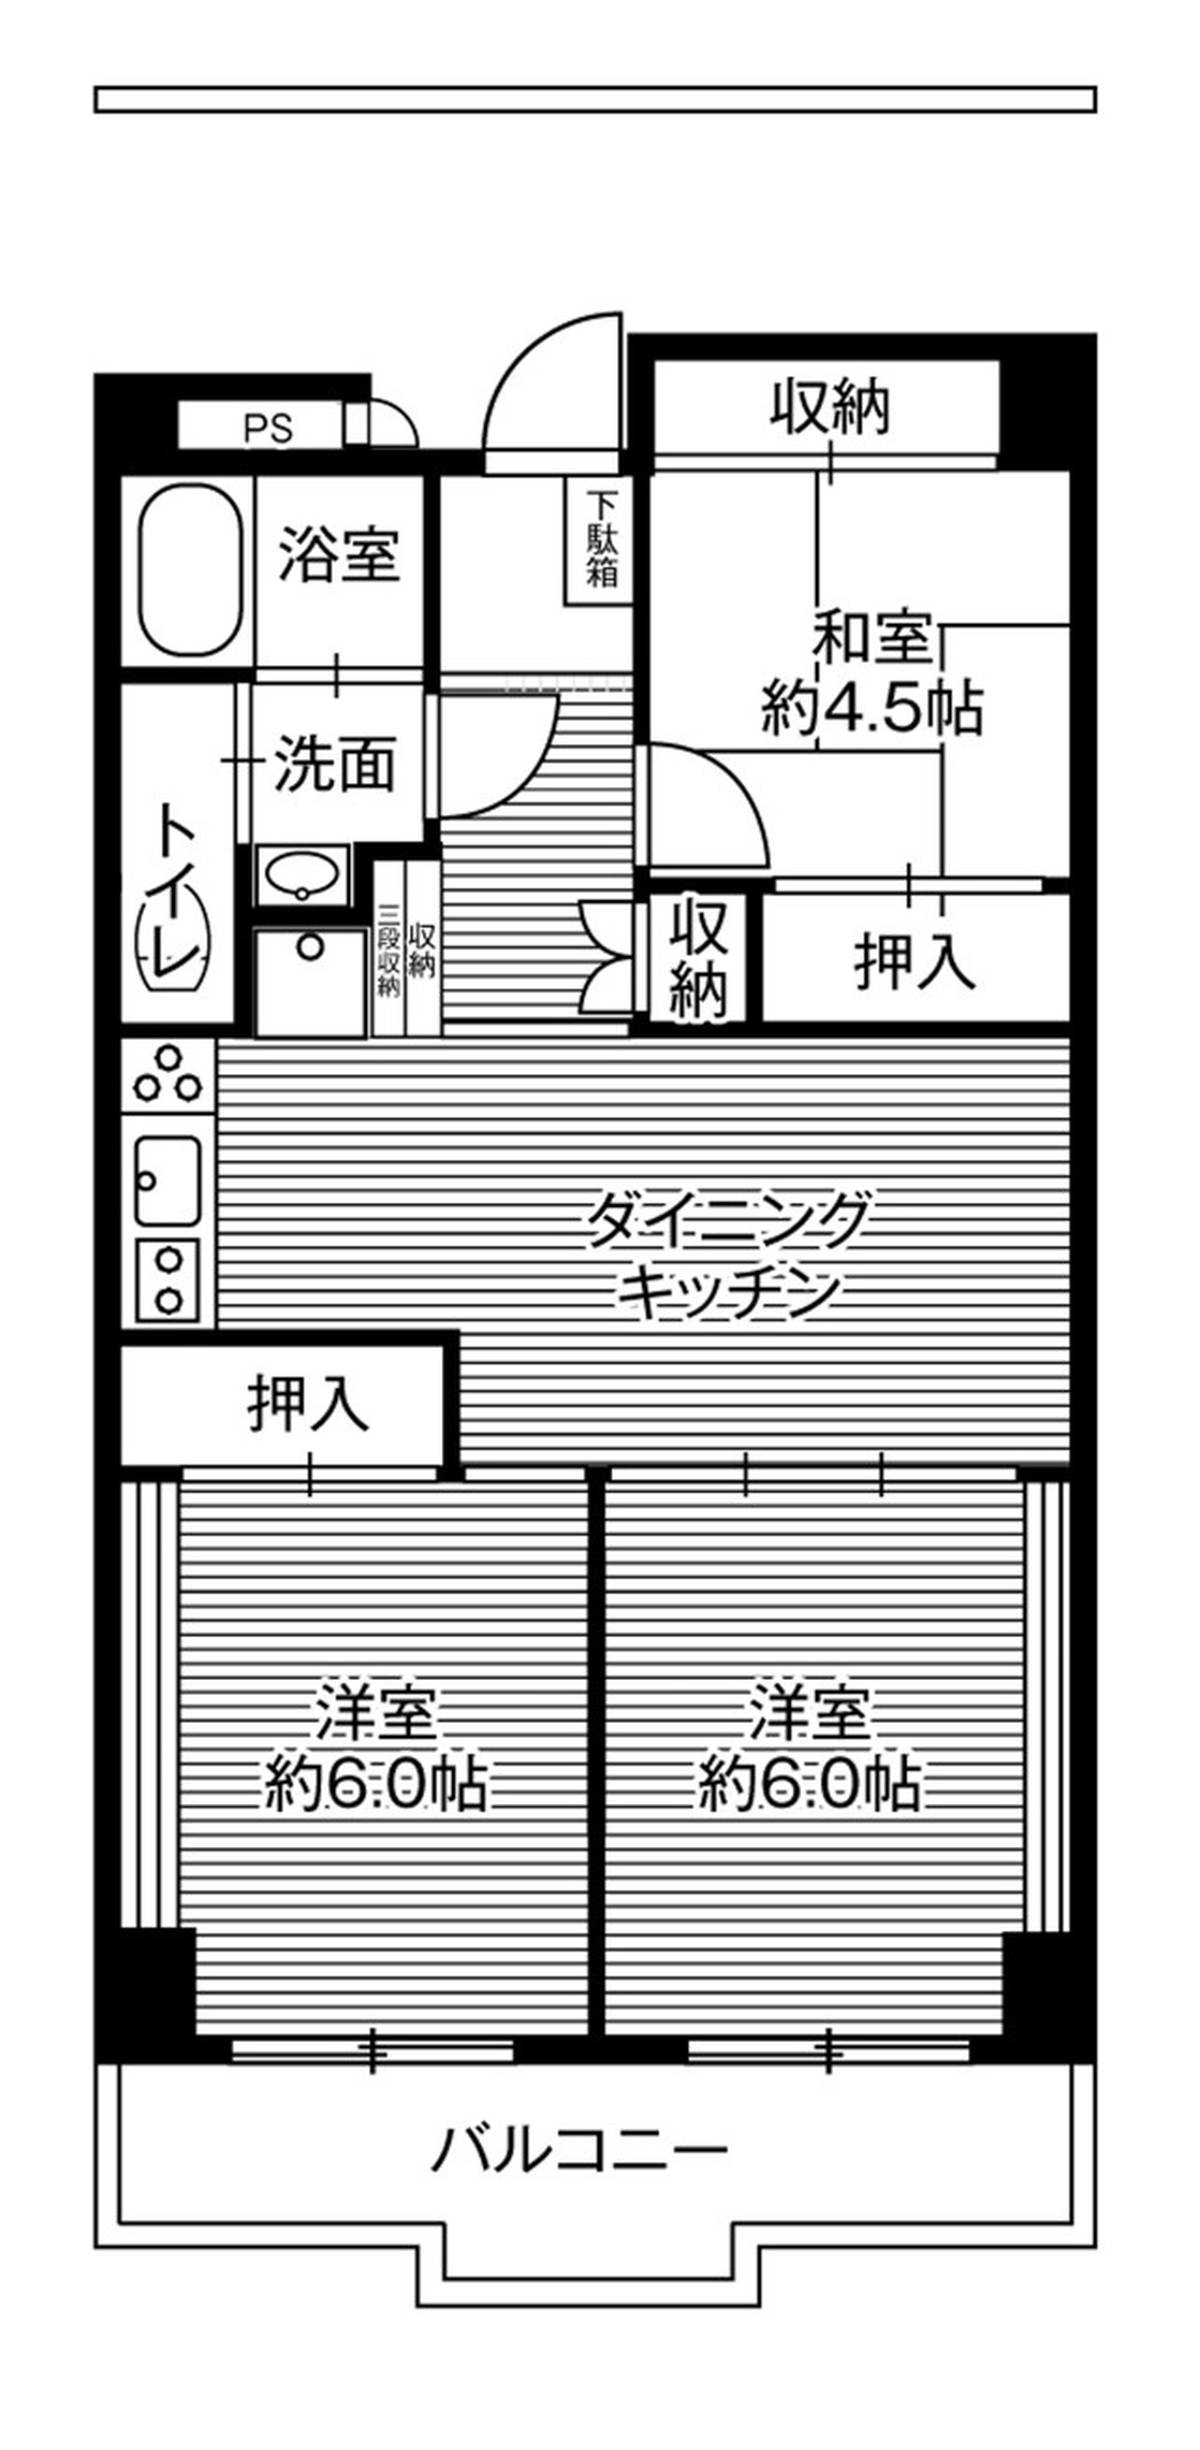 3DK floorplan of Village House Tochigi Hinode Tower in Tochigi-shi